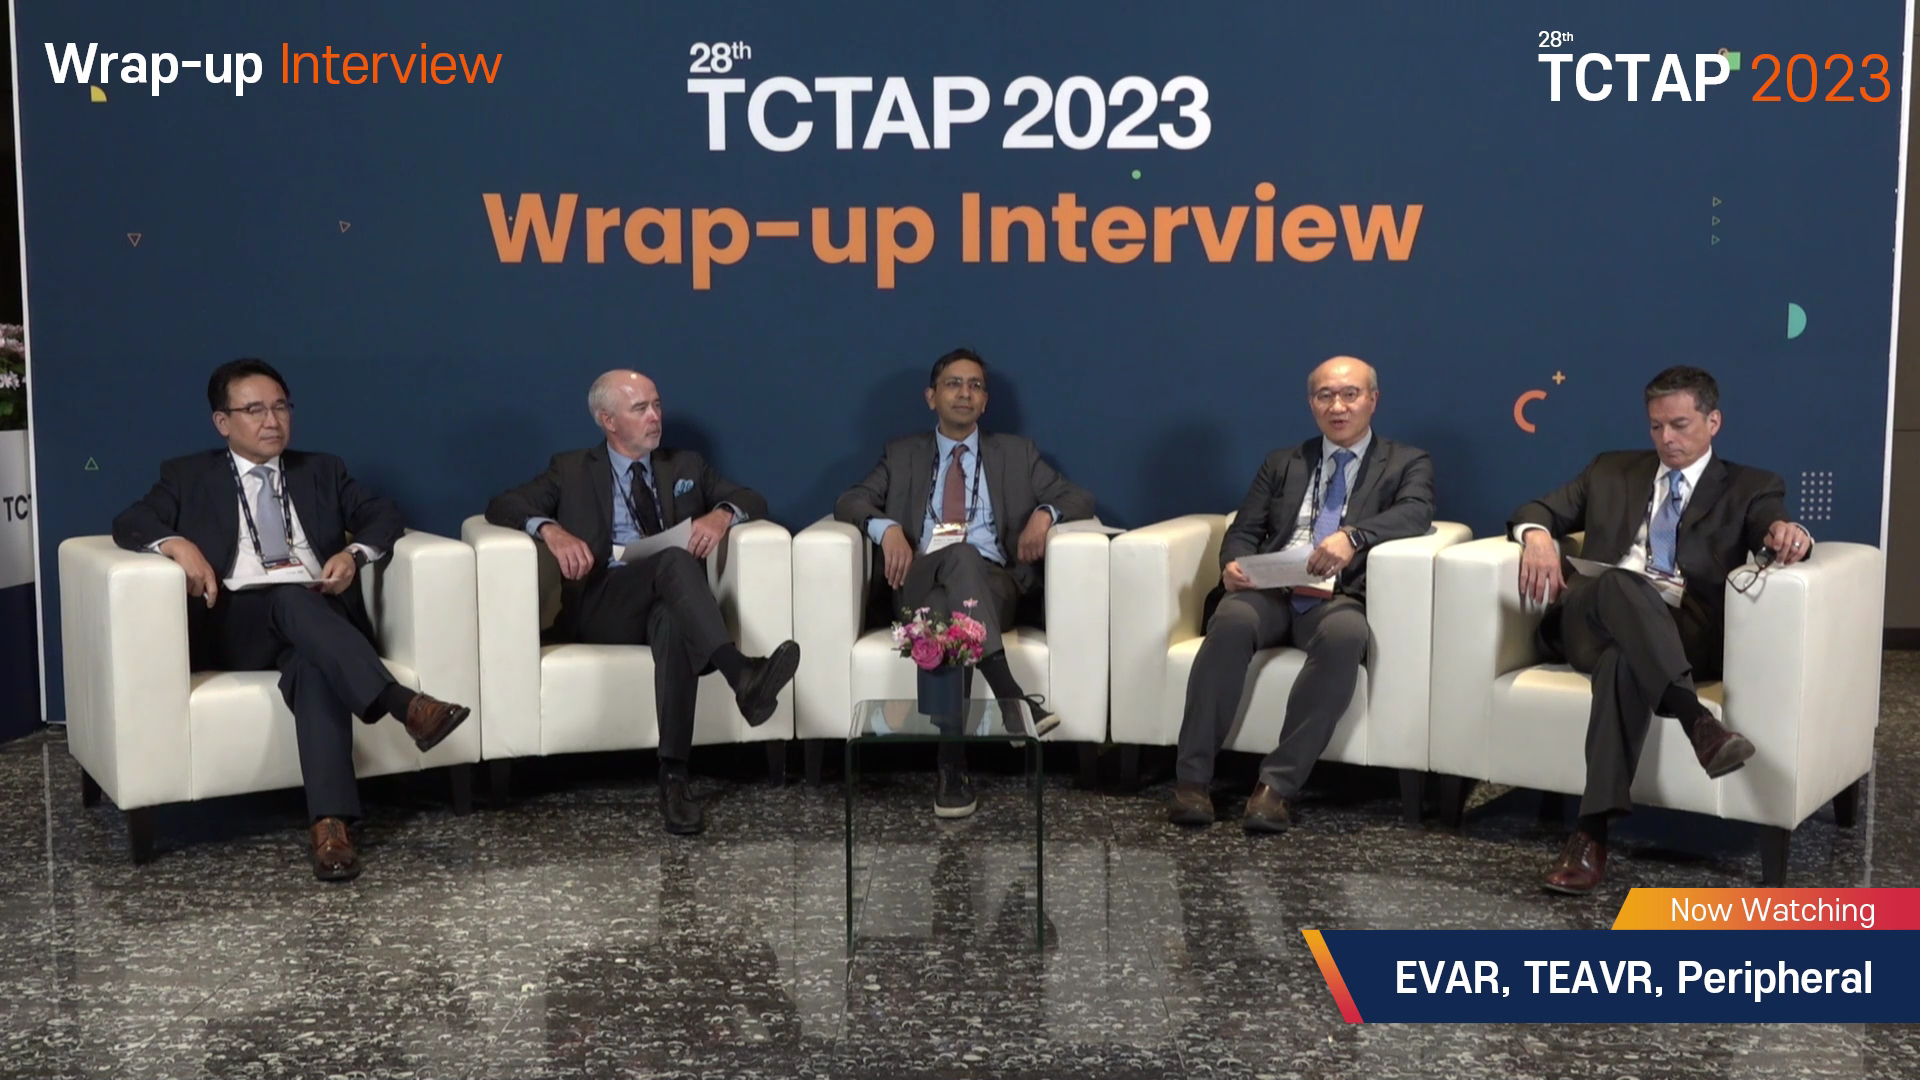 [TCTAP Wrap-up Interviews] EVAR, TEVAR, Peripheral